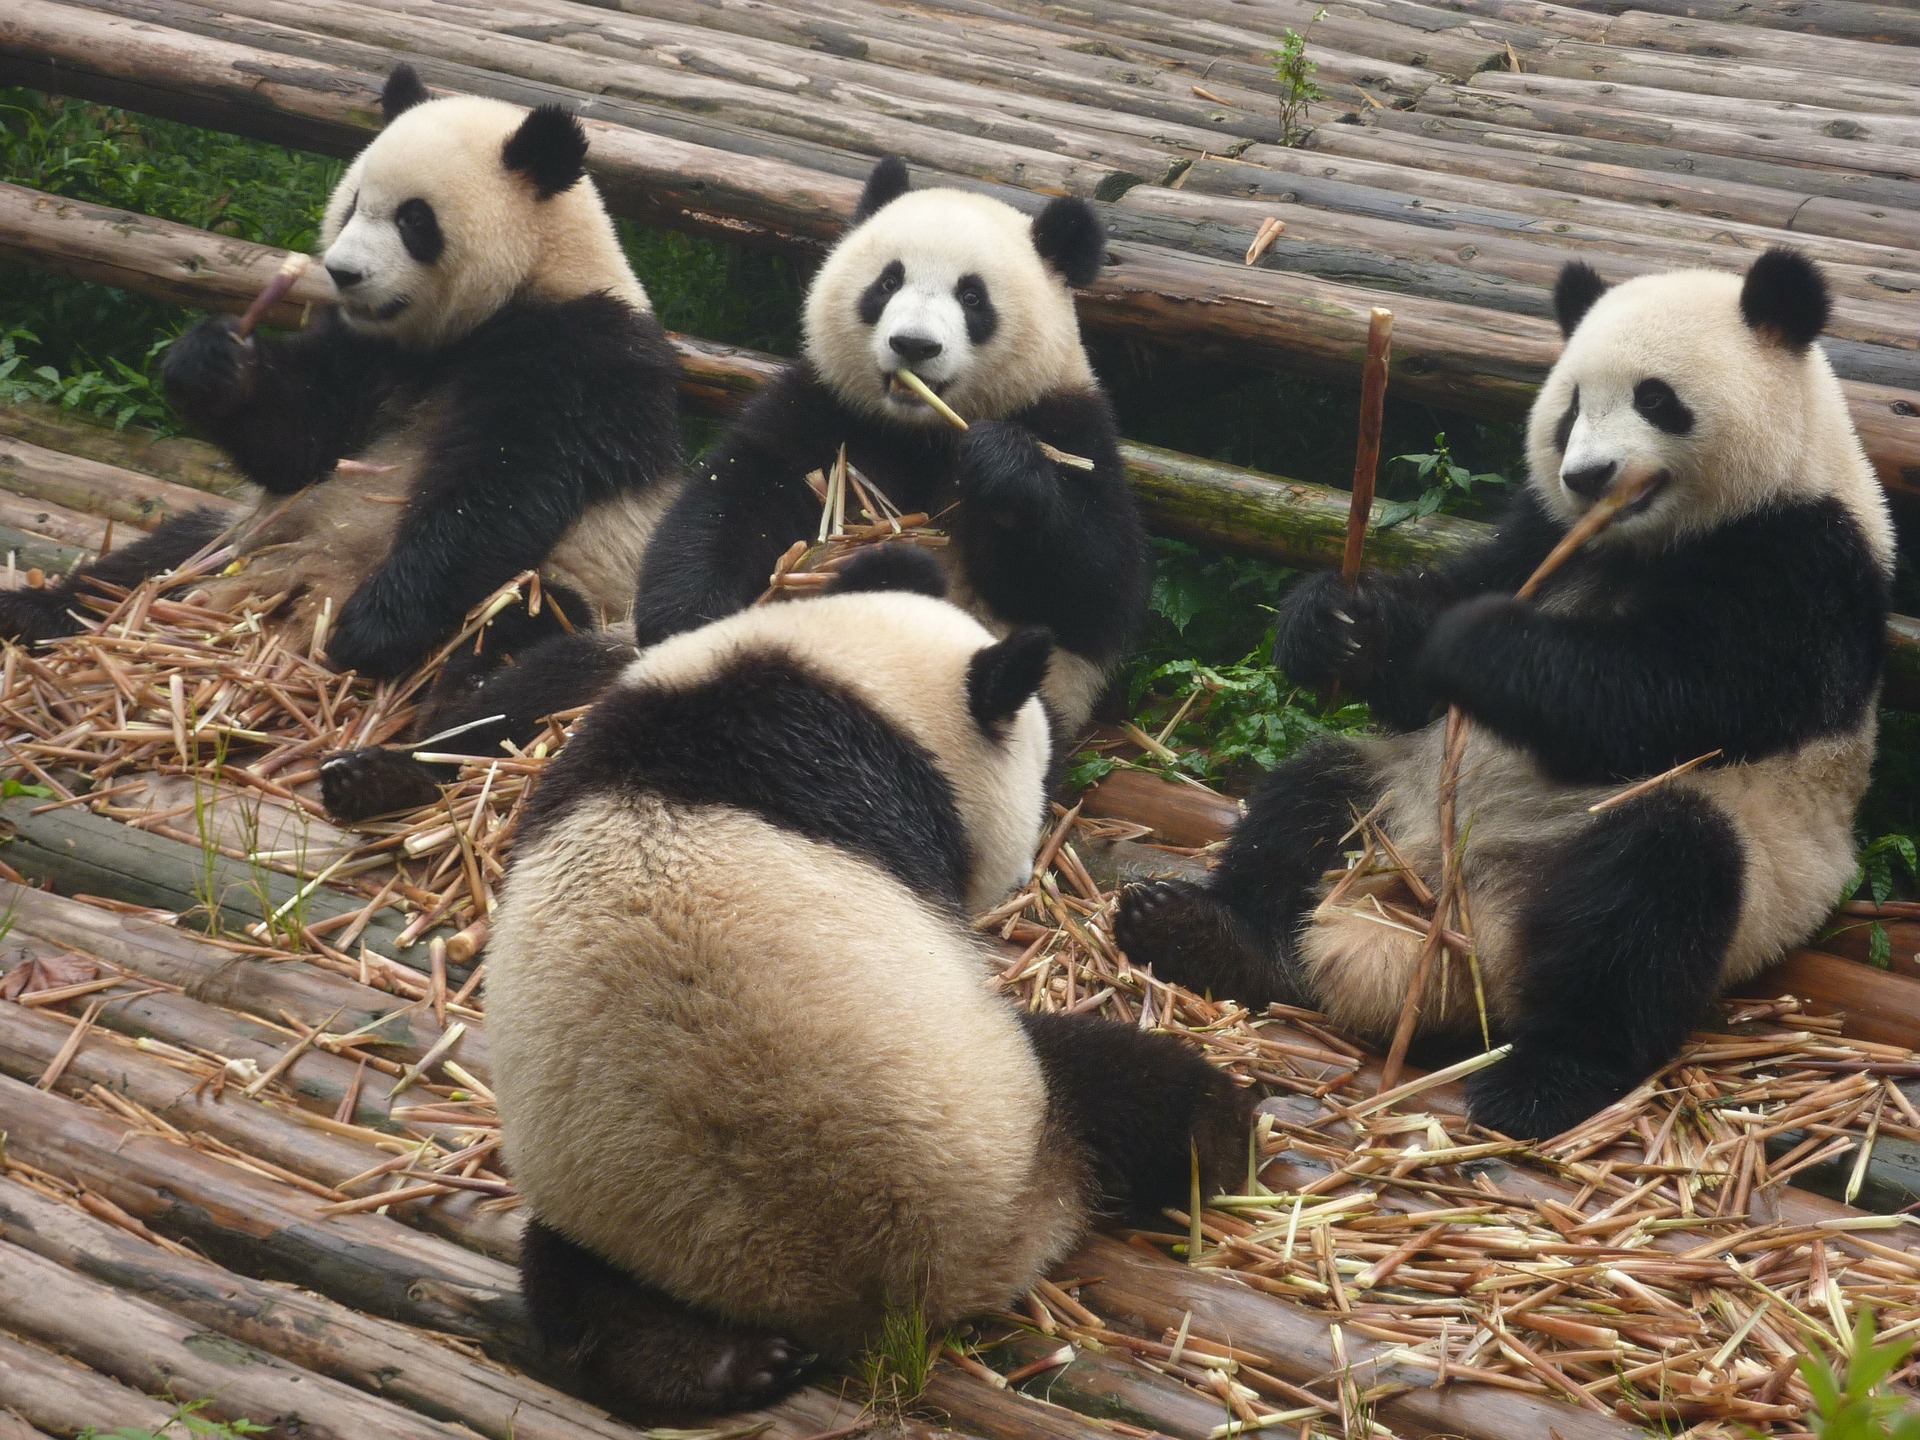 Great pandas in China